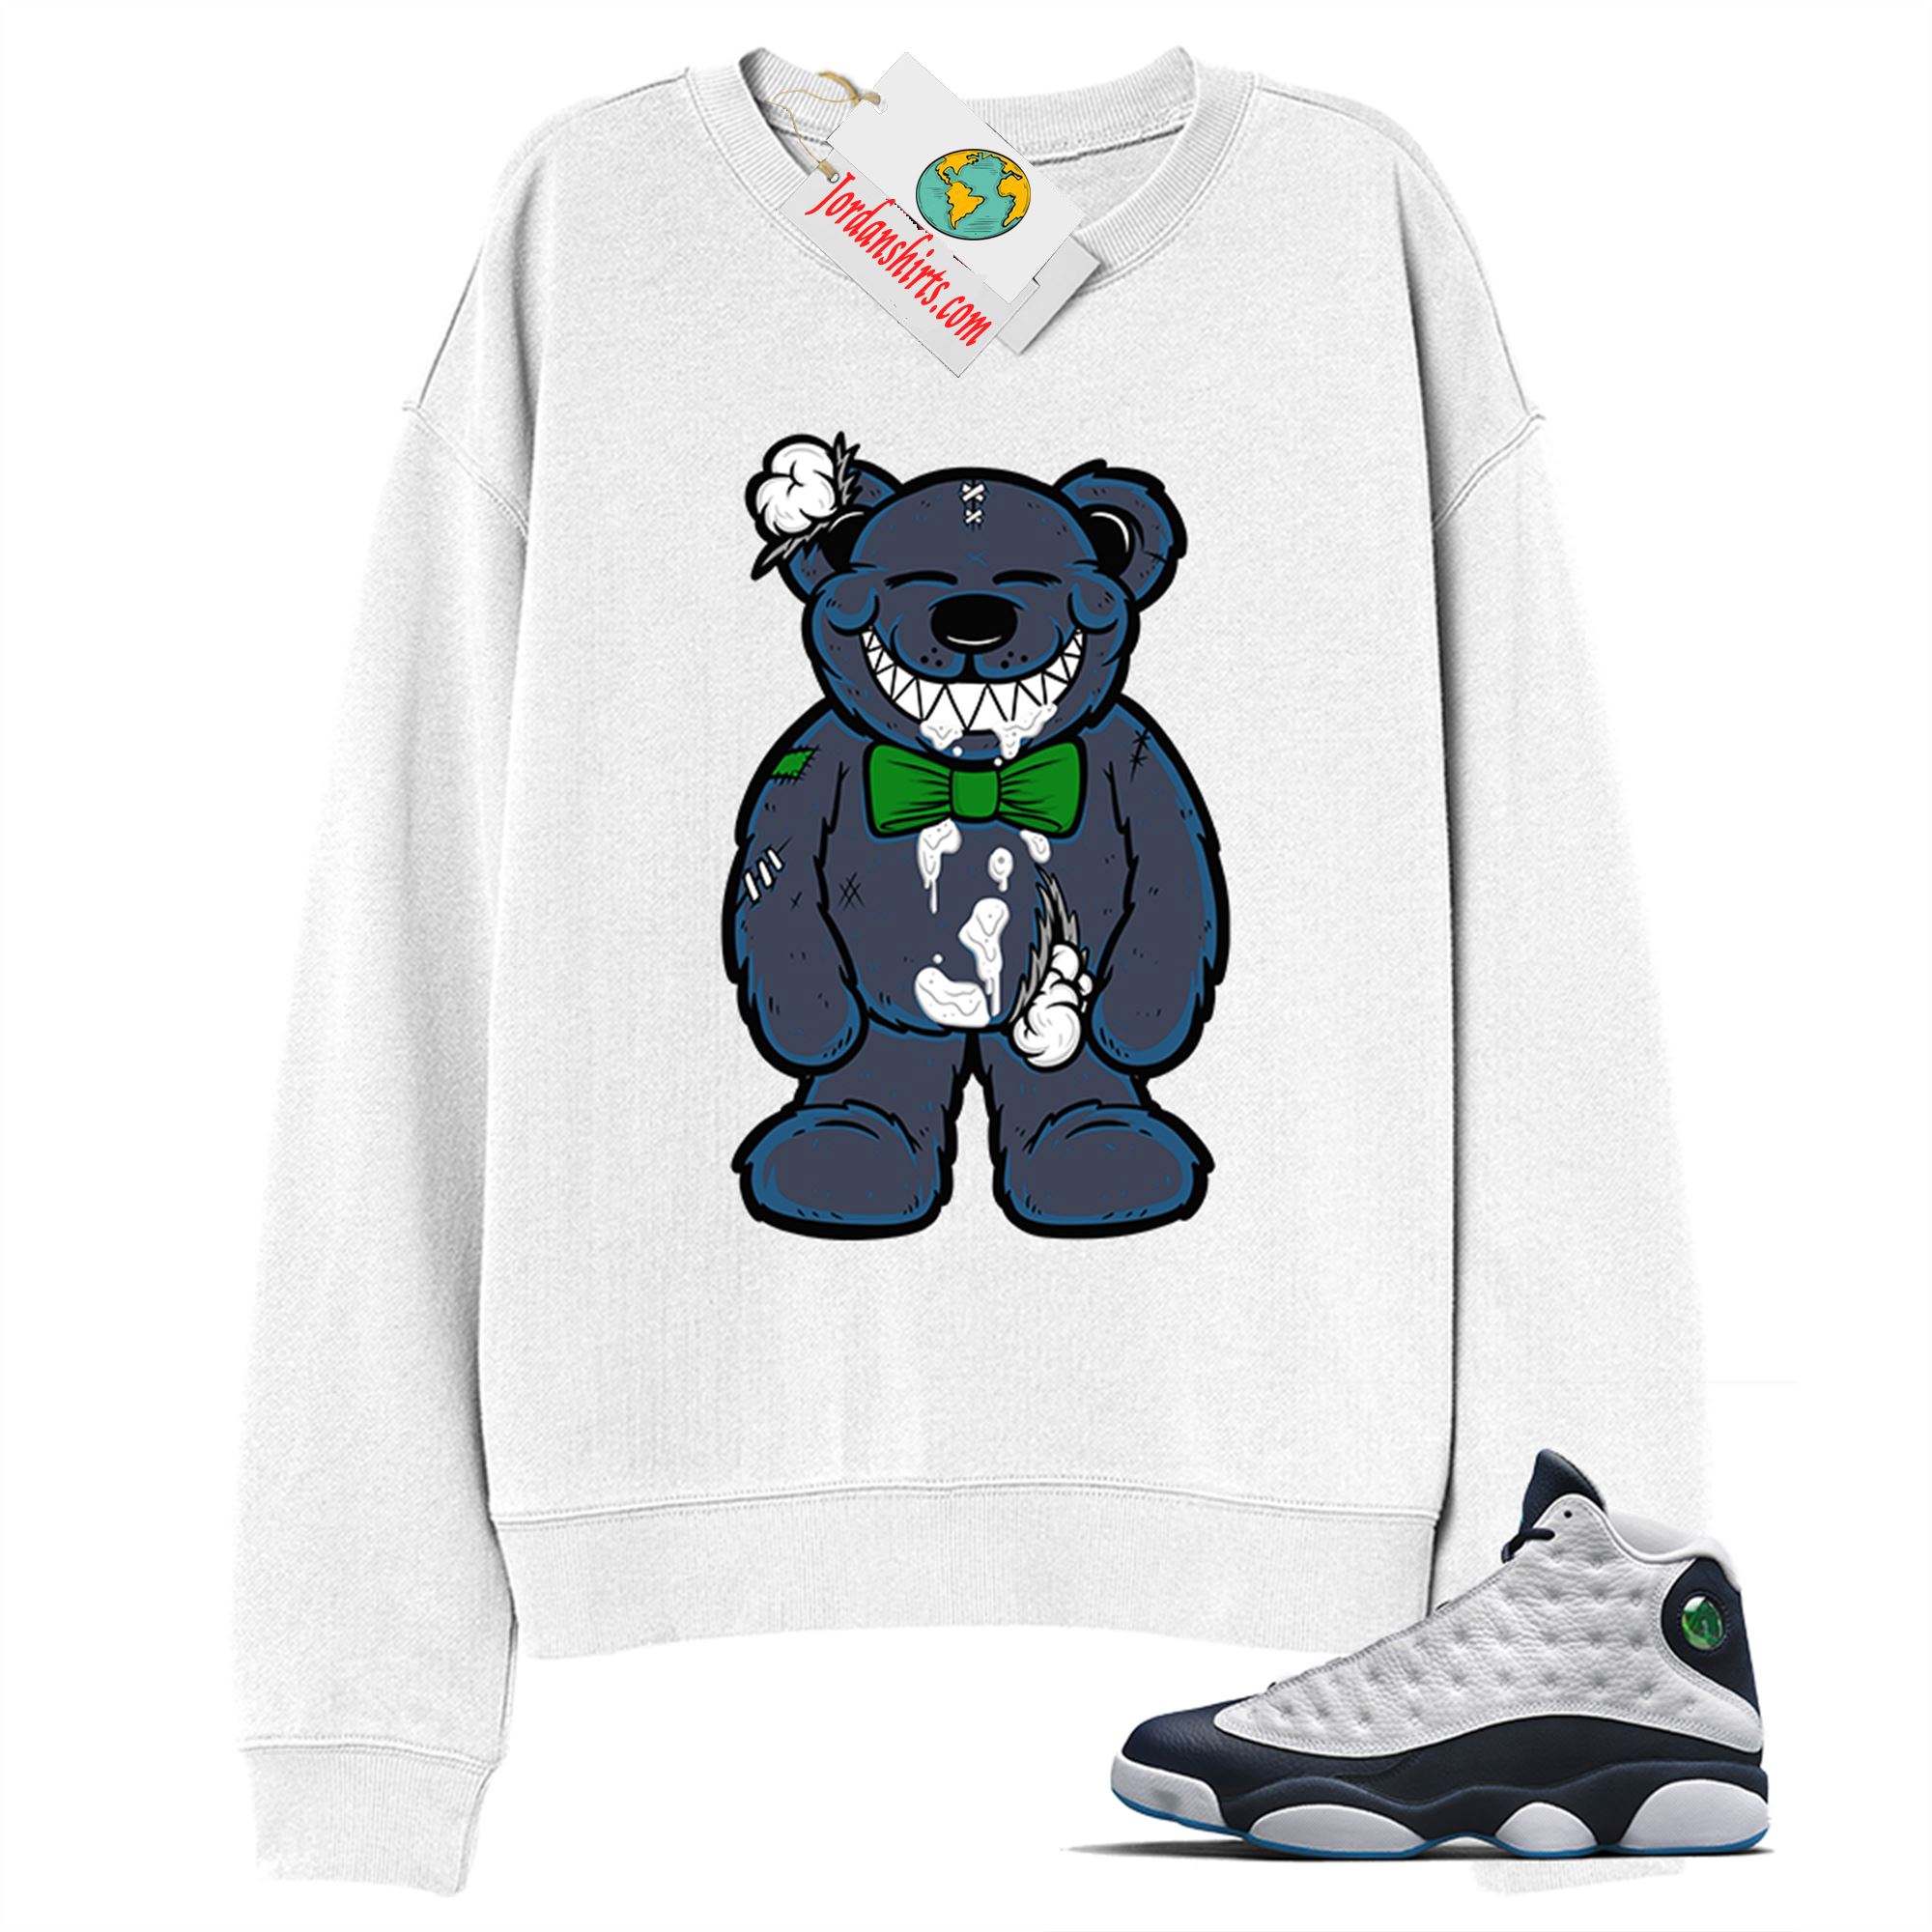 Jordan 13 Sweatshirt, Teddy Bear Smile White Sweatshirt Air Jordan 13 Obsidian 13s Plus Size Up To 5xl